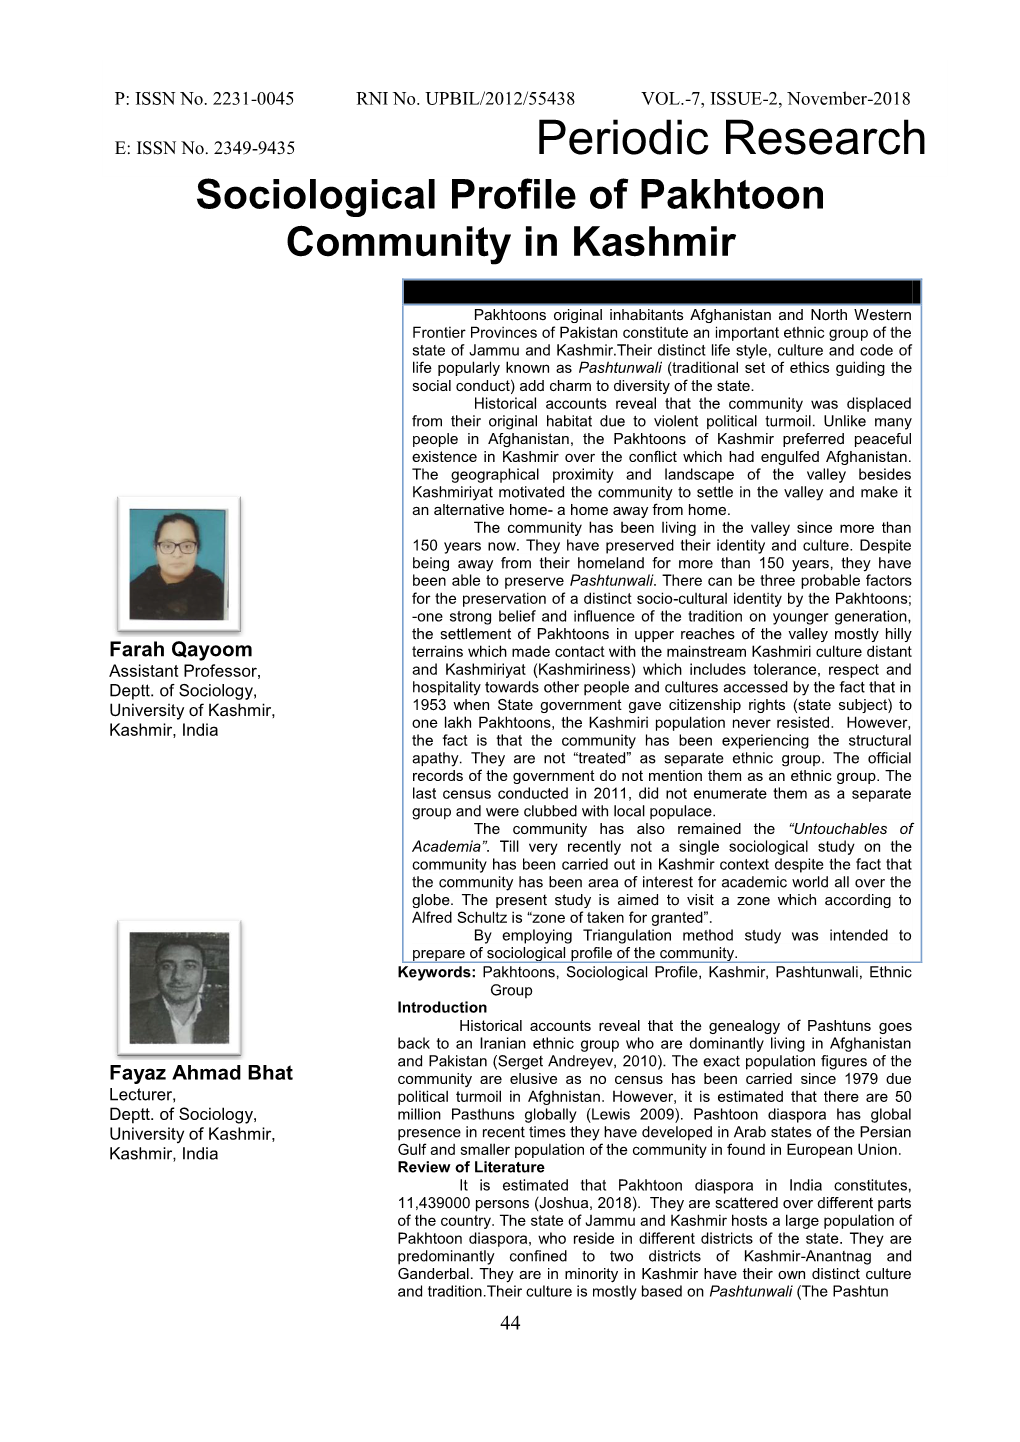 Sociological Profile of Pakhtoon Community in Kashmir